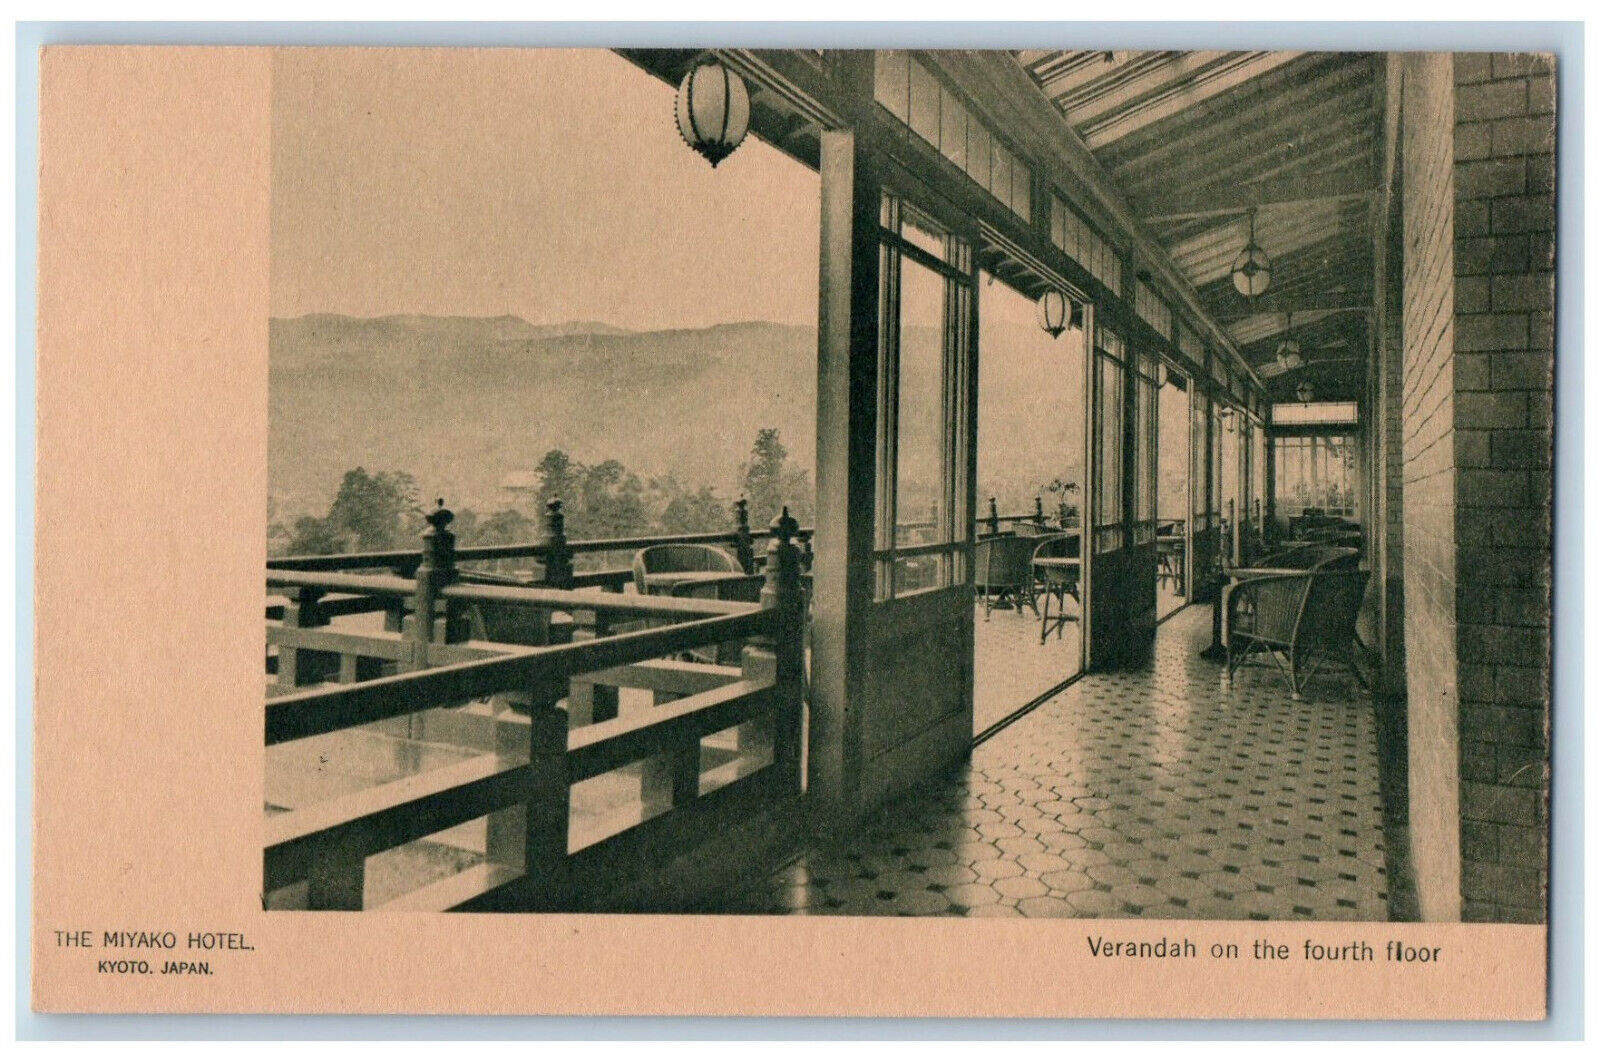 Kyoto Japan Postcard The Miyako Hotel Verandah on the 4th Floor c1940's